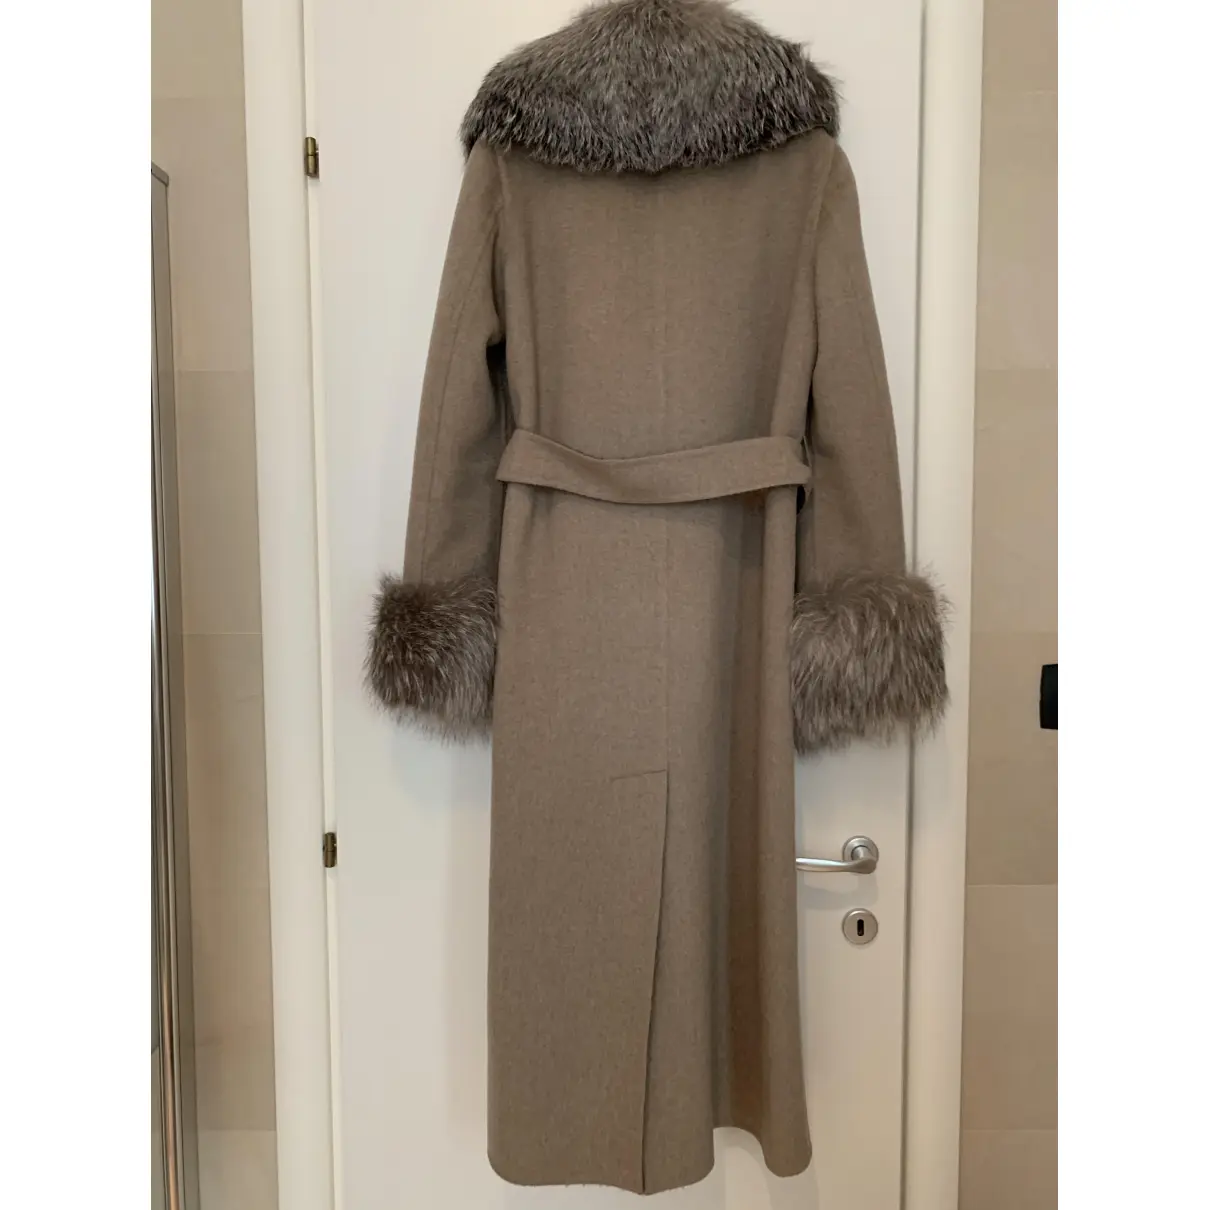 Buy Colombo Cashmere coat online